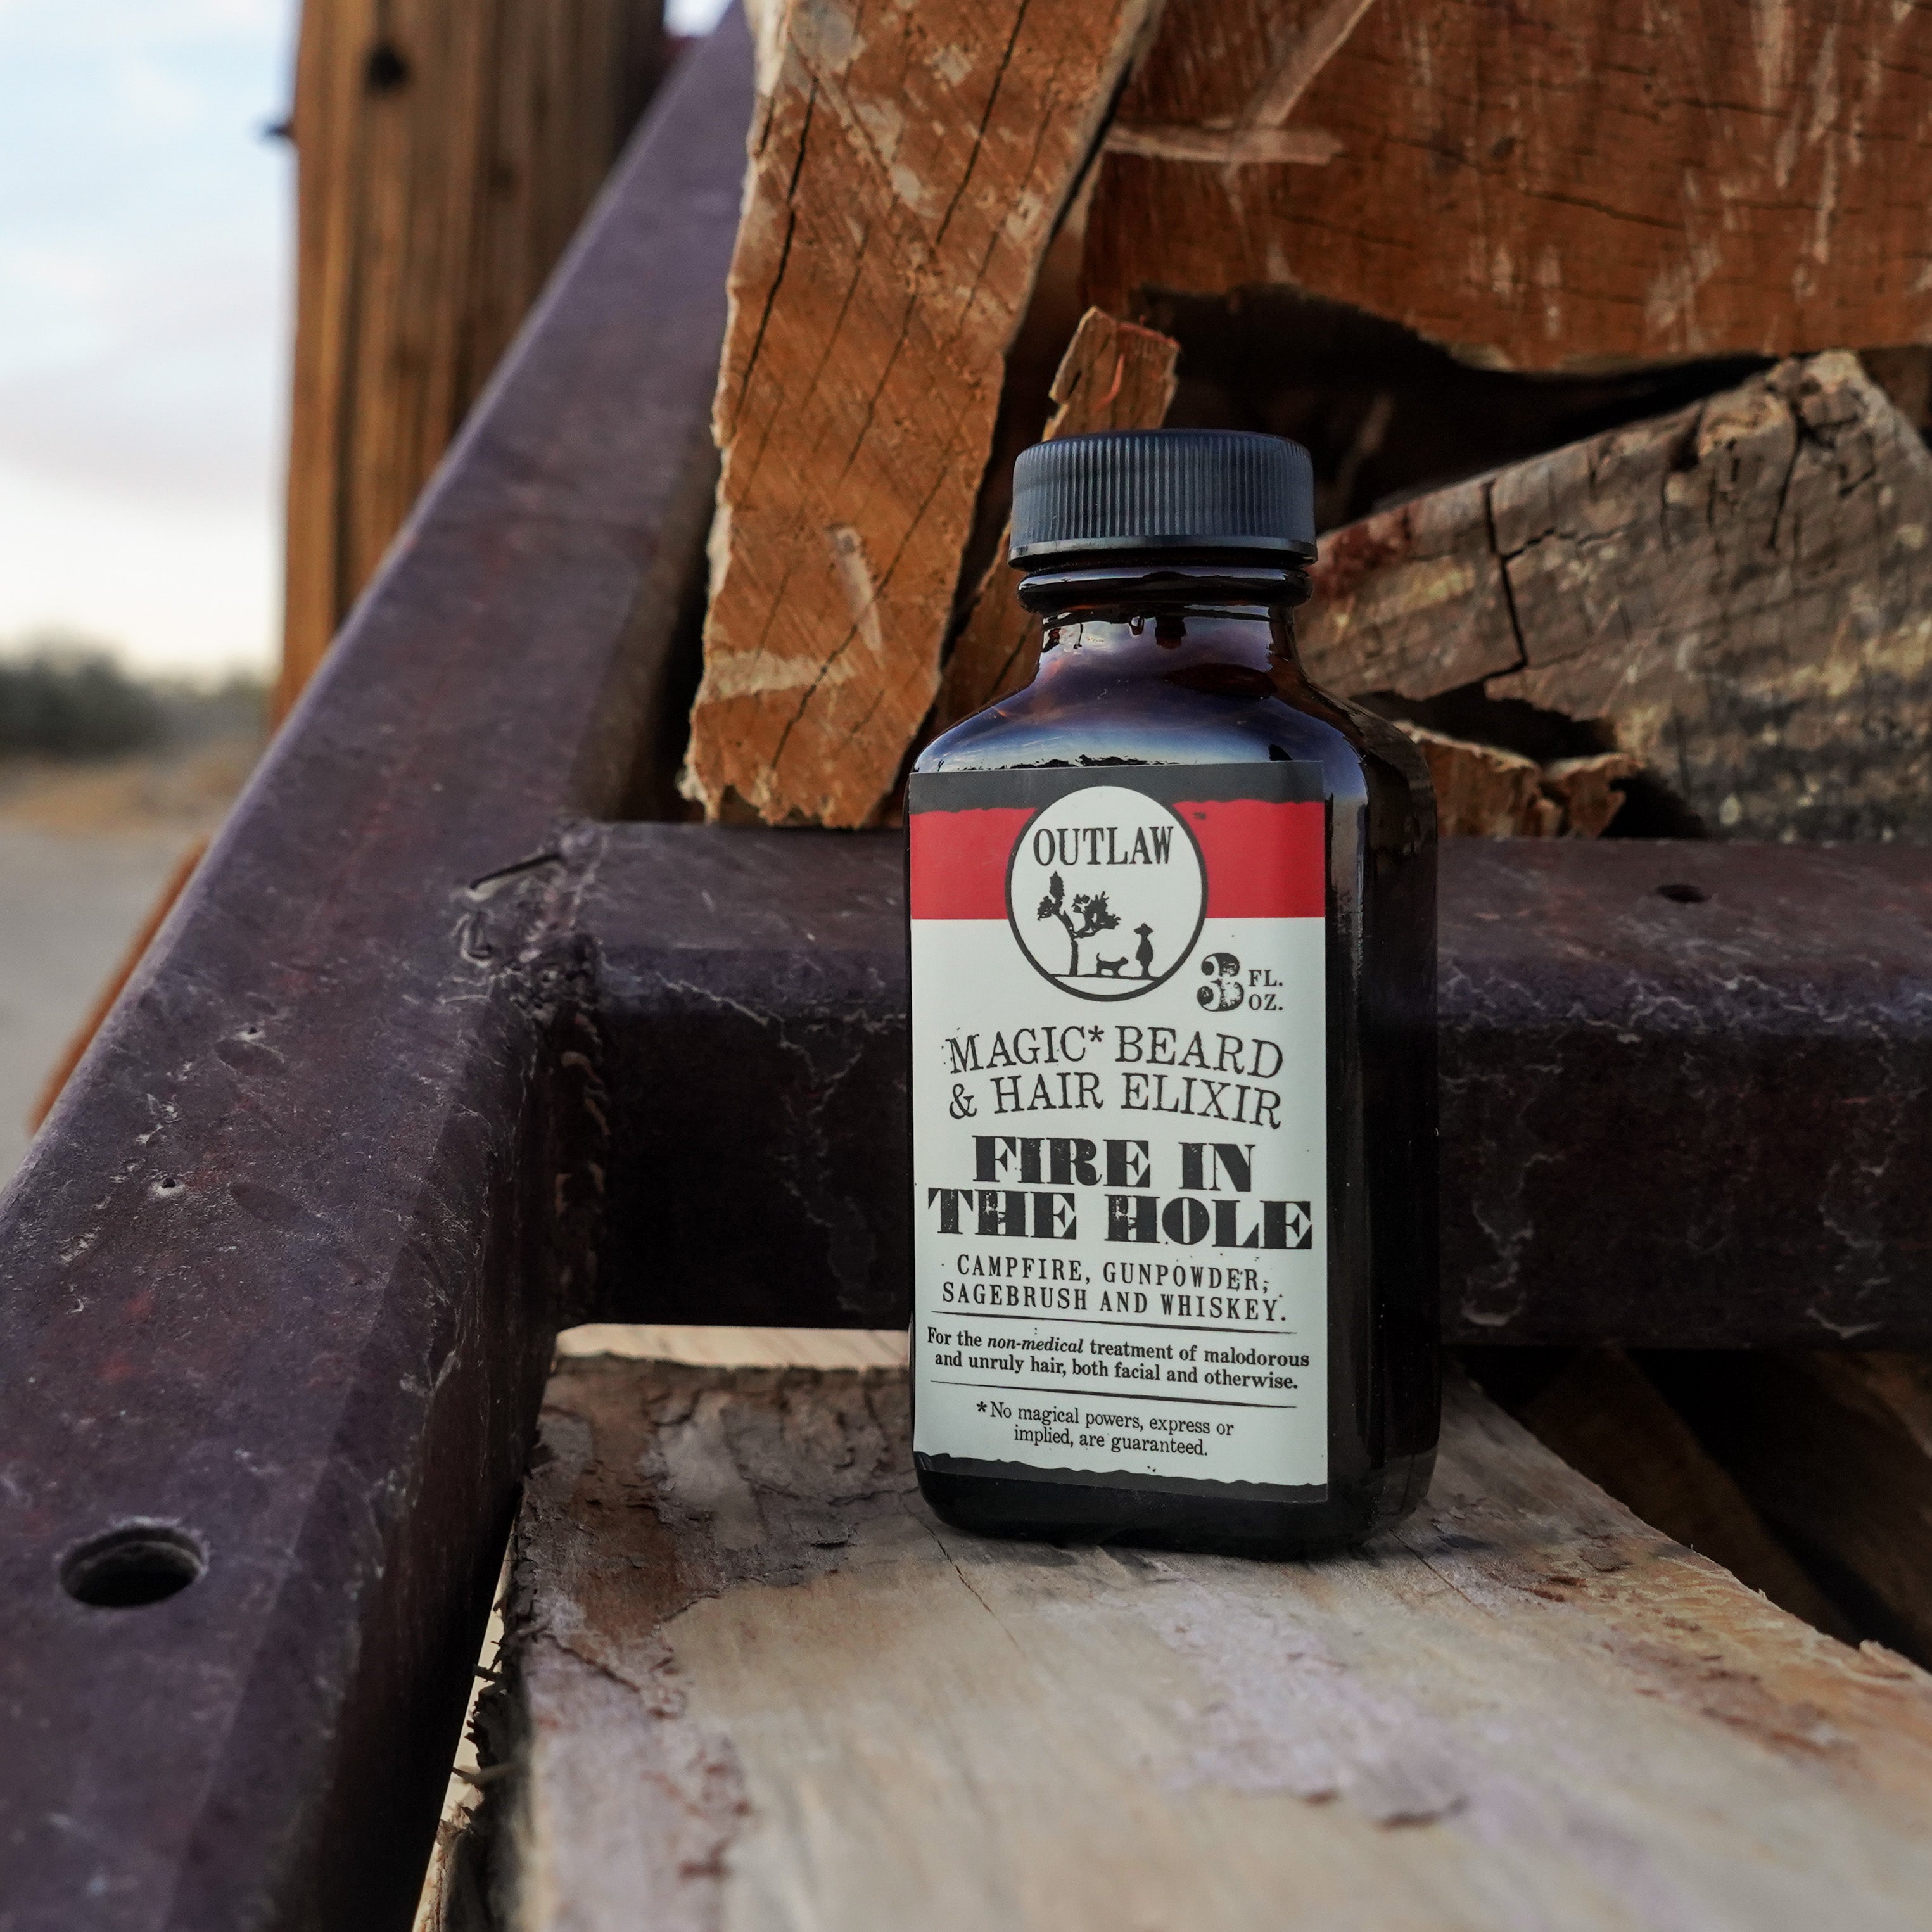 Outlaw's The Gambler Beard Oil & Hair Elixir